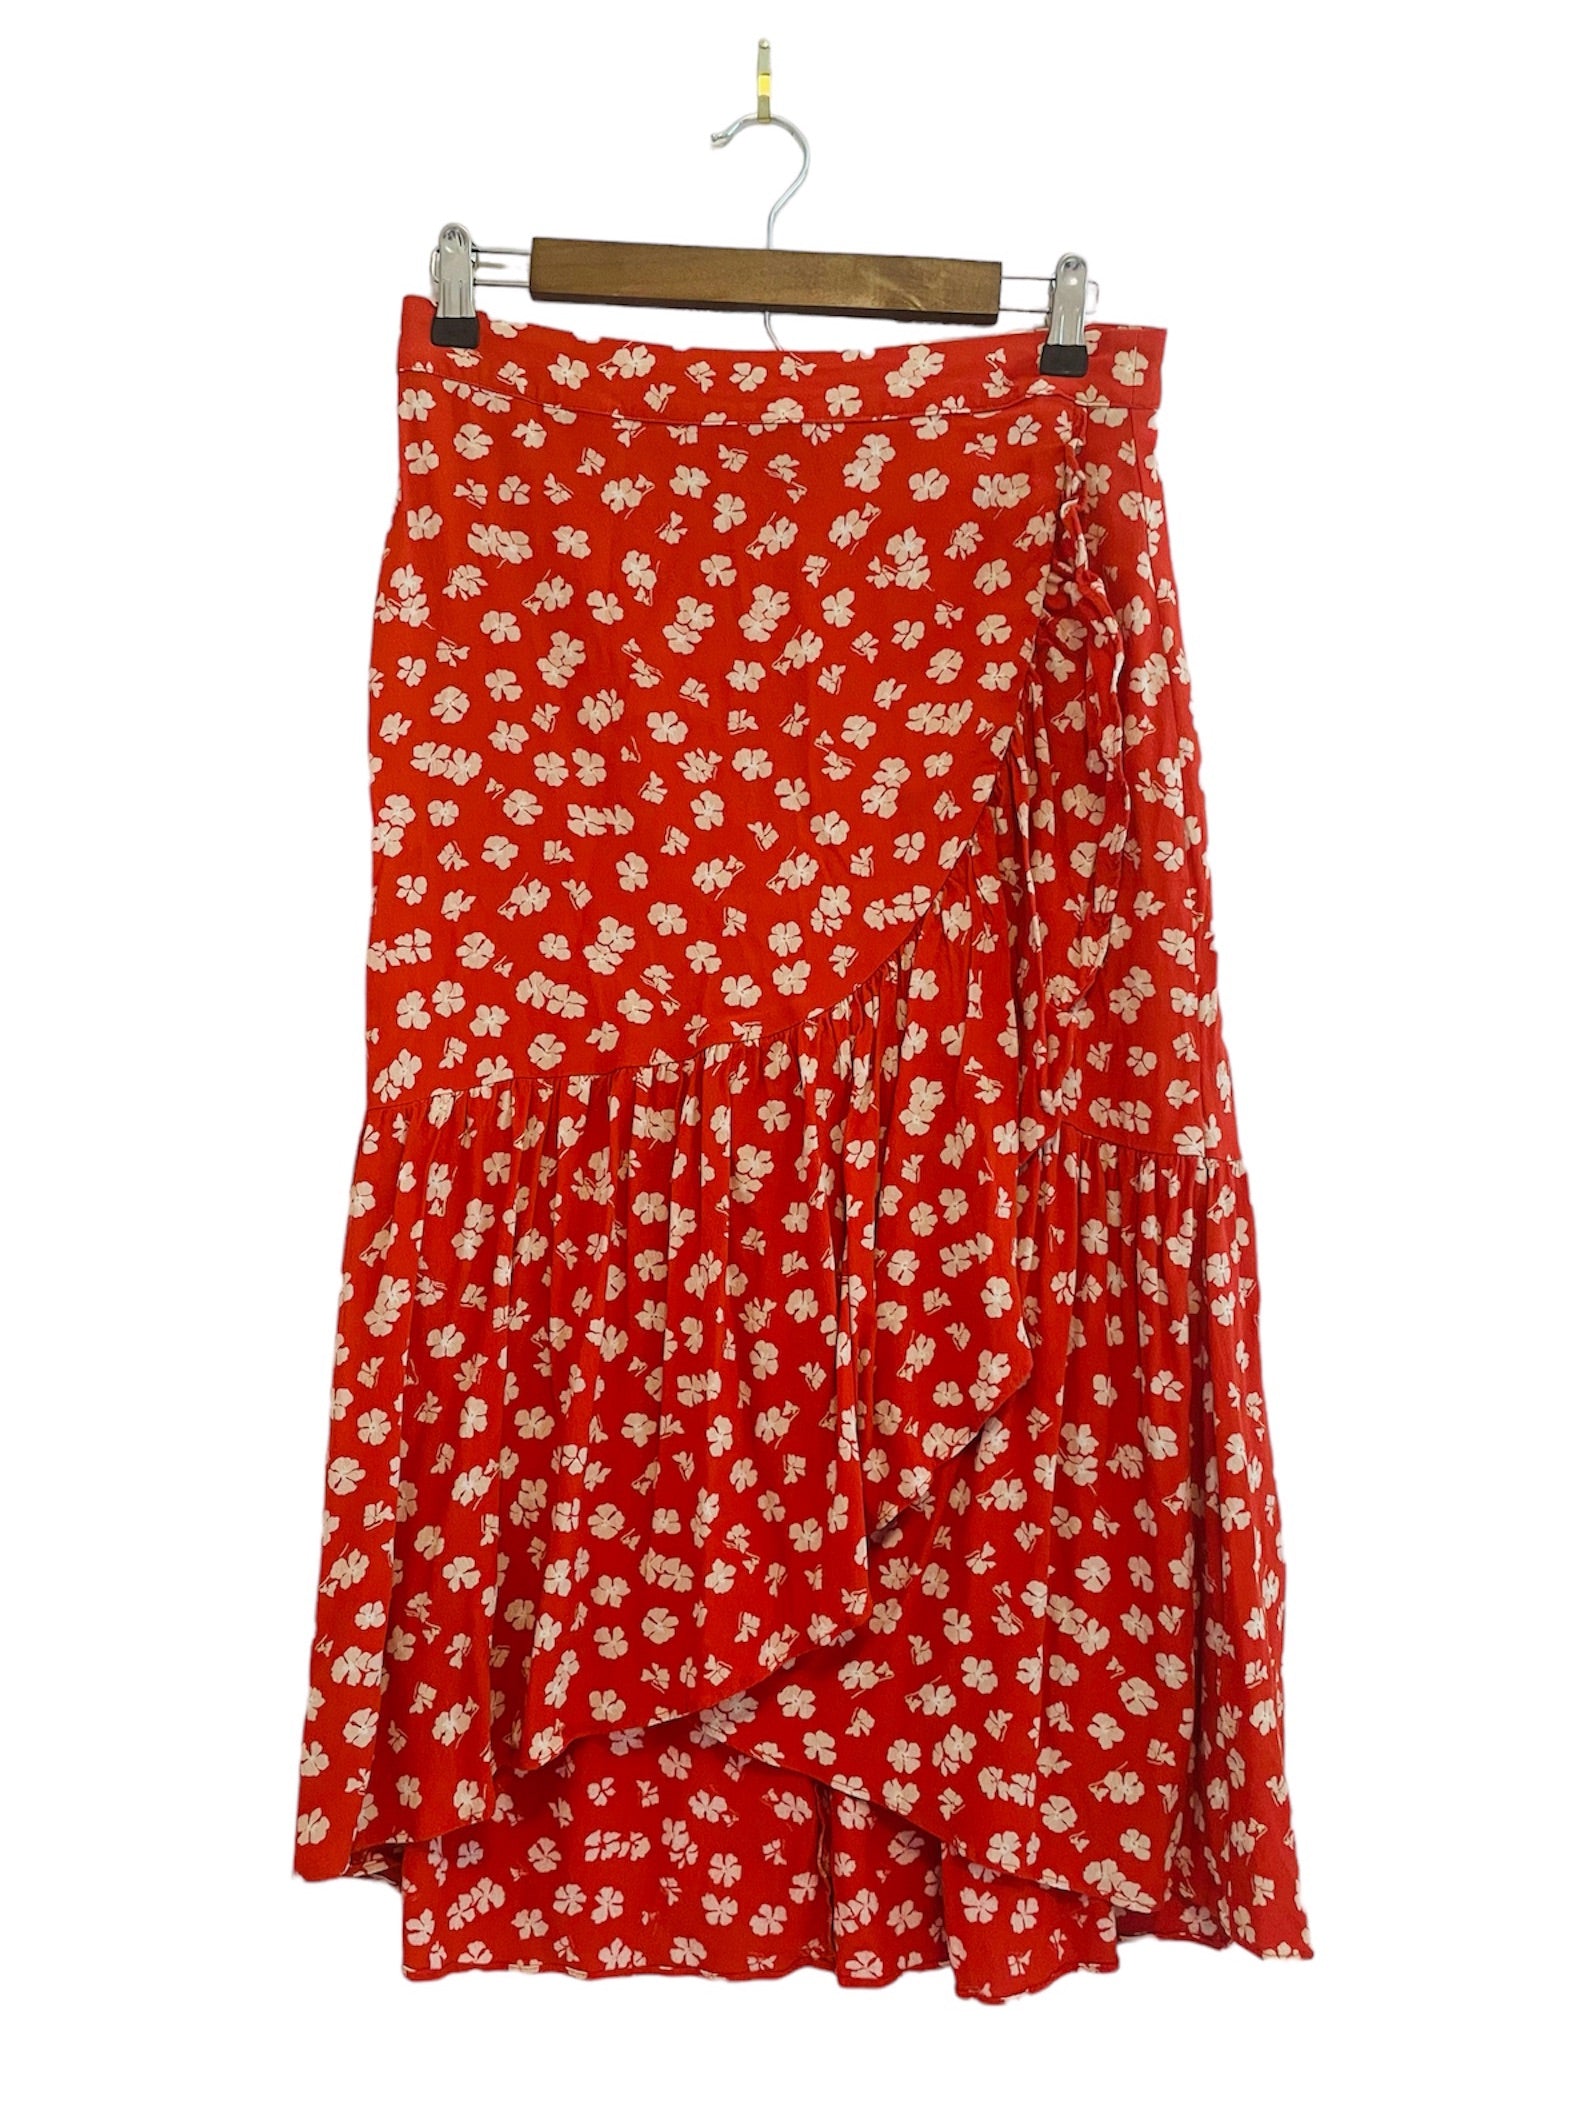 Ruffle- Wrap Midi Madewell Skirt Size: 6